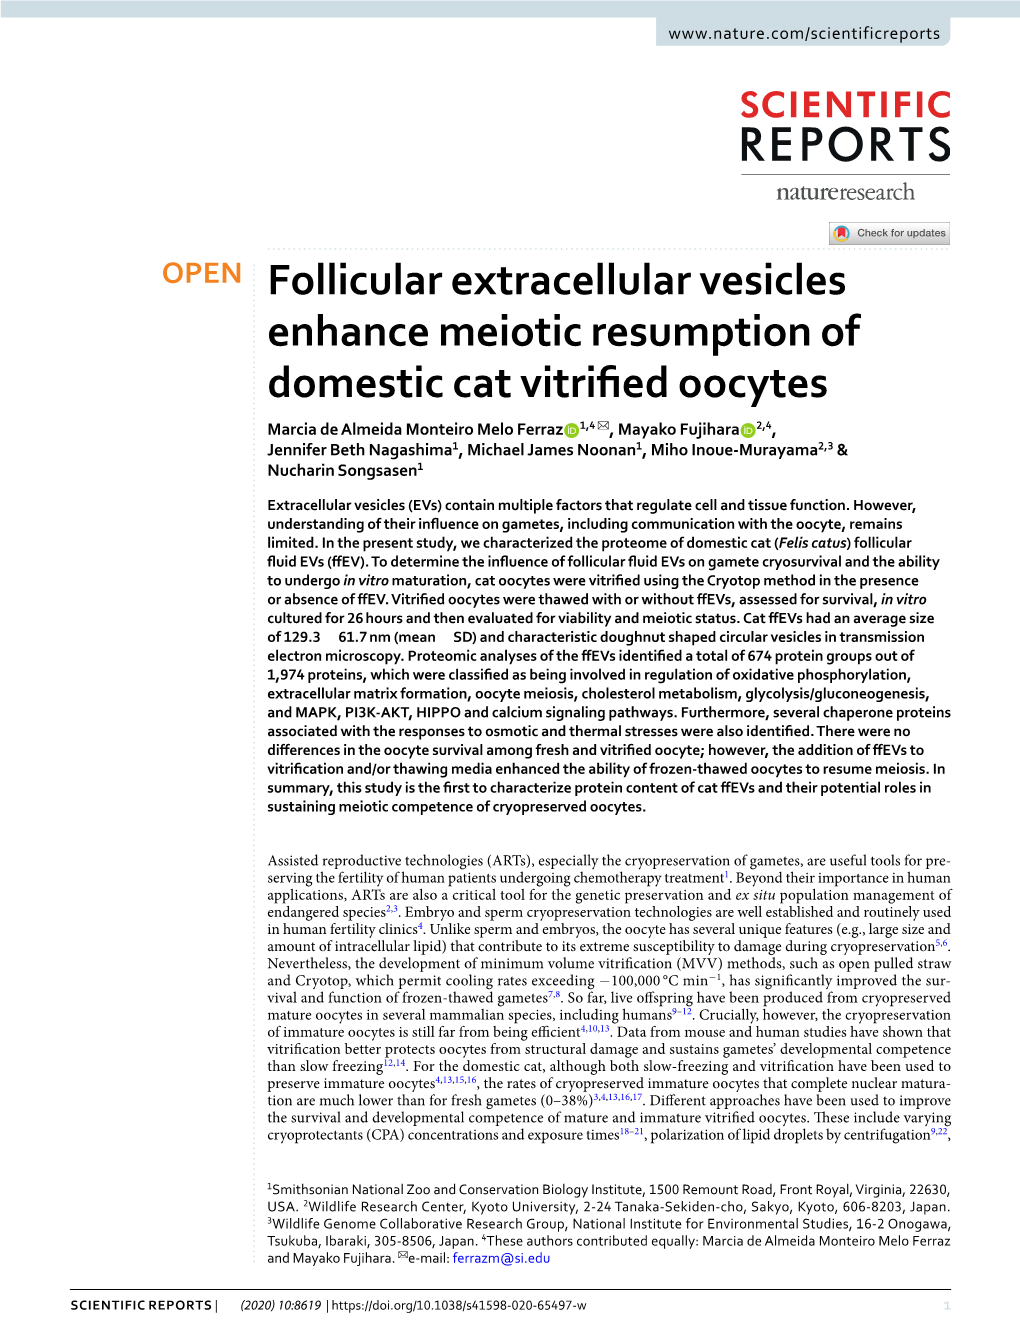 Follicular Extracellular Vesicles Enhance Meiotic Resumption Of